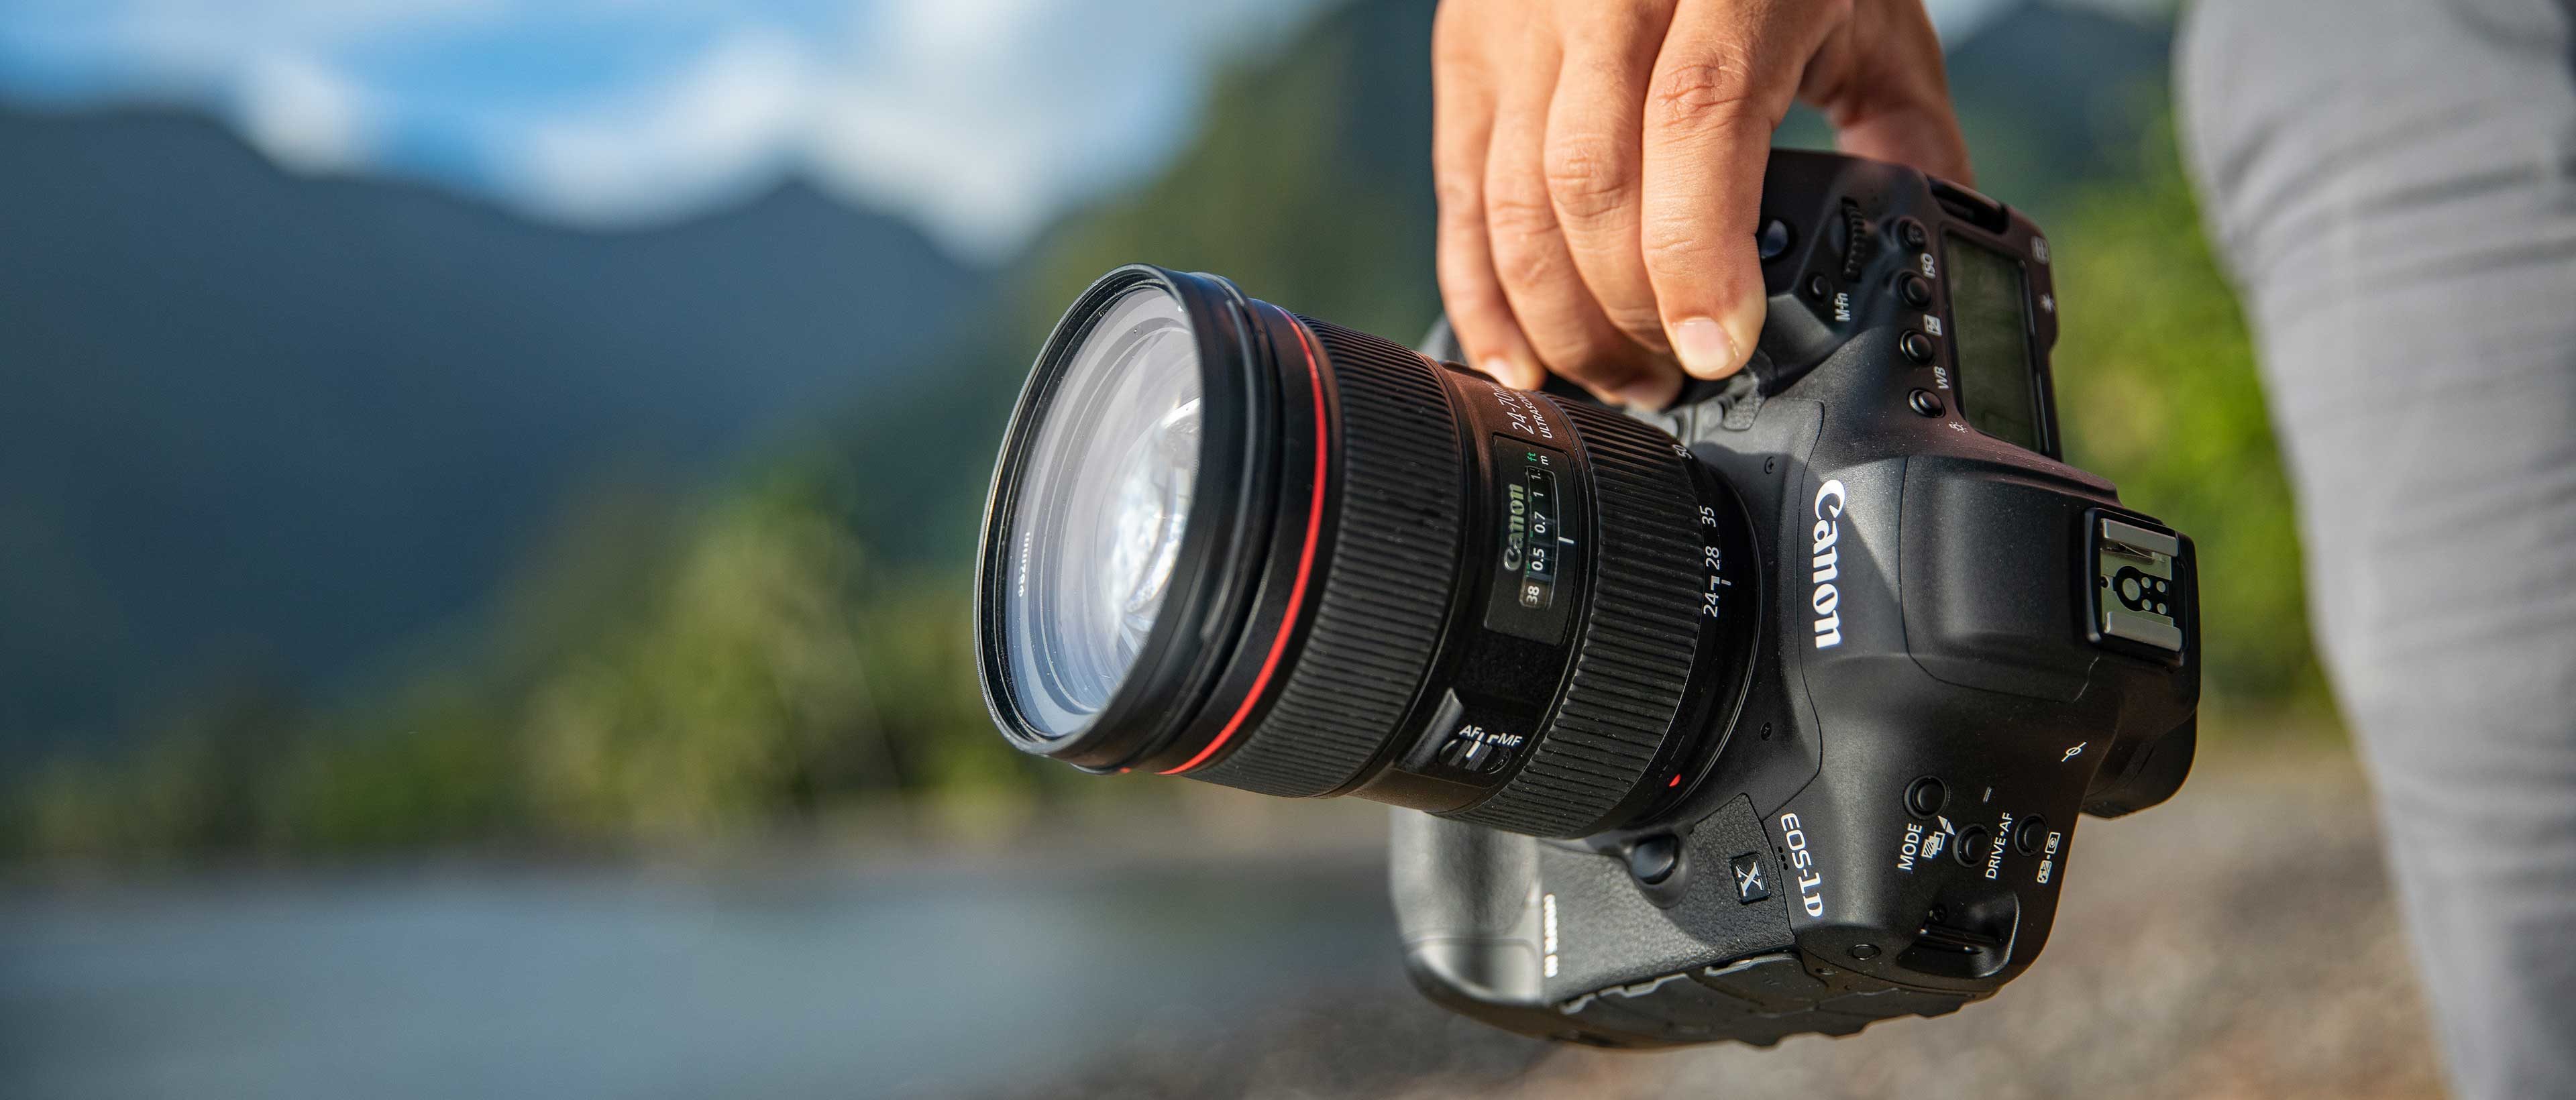 Preview Image: Canon EOS-1D X Mark III